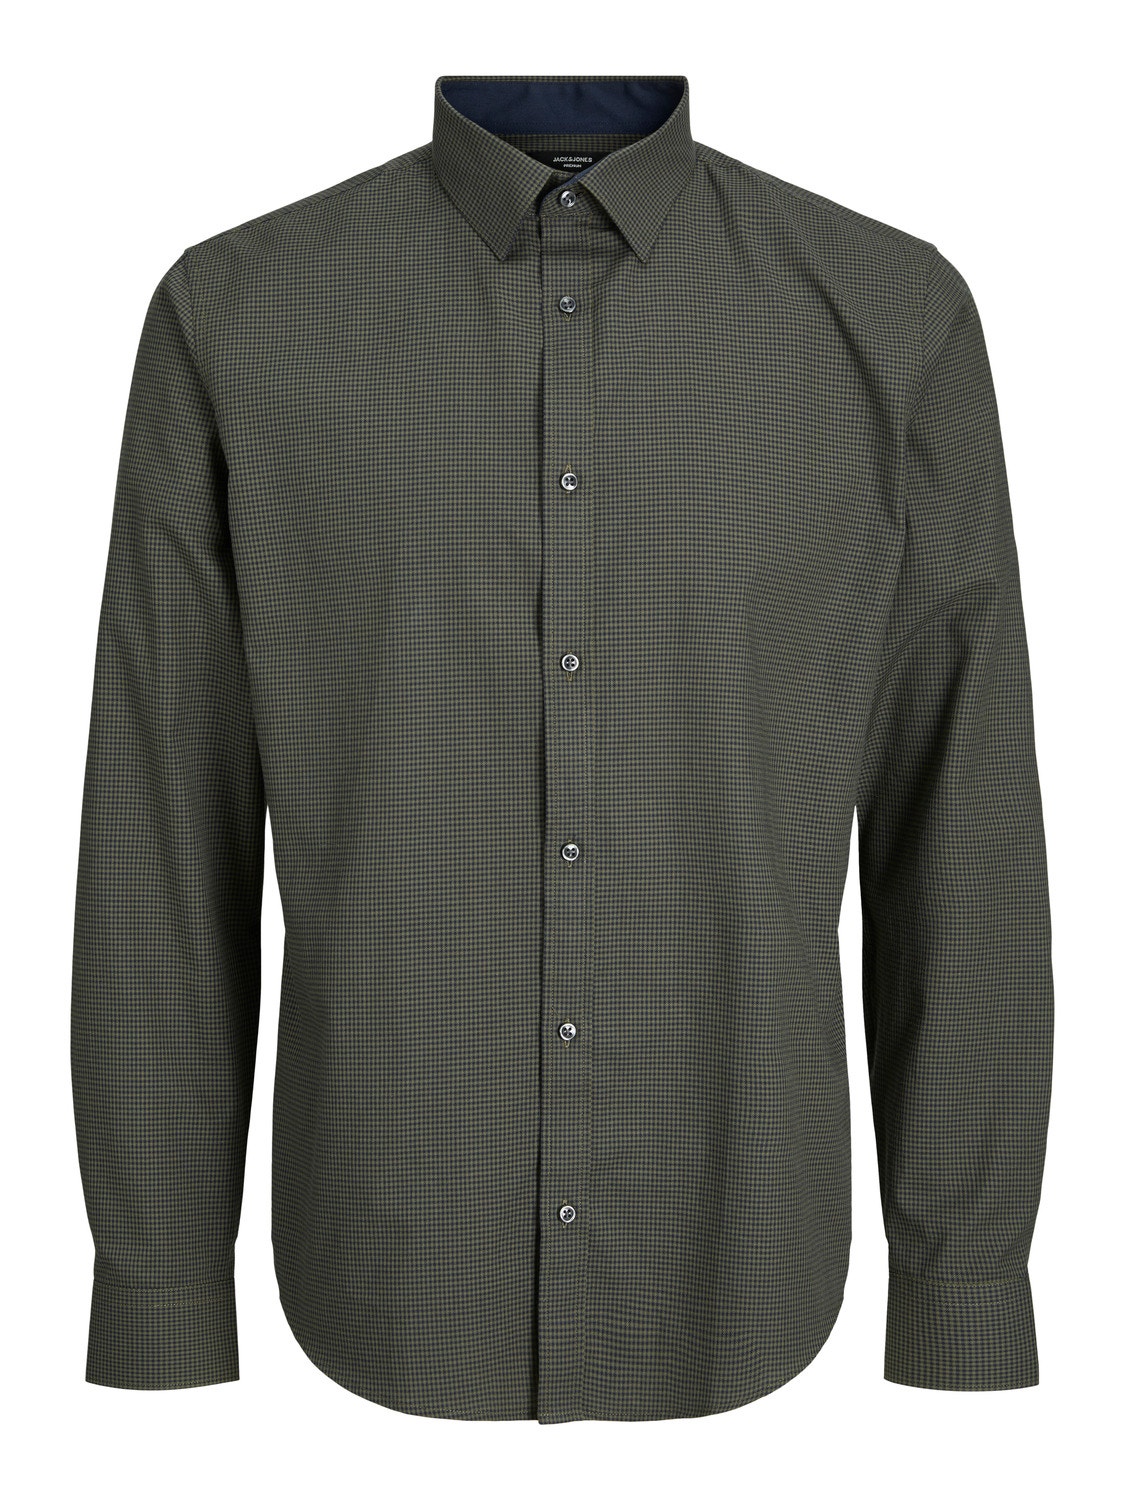 Jack & Jones Comfort Fit Shirt -Olive Night - 12239027